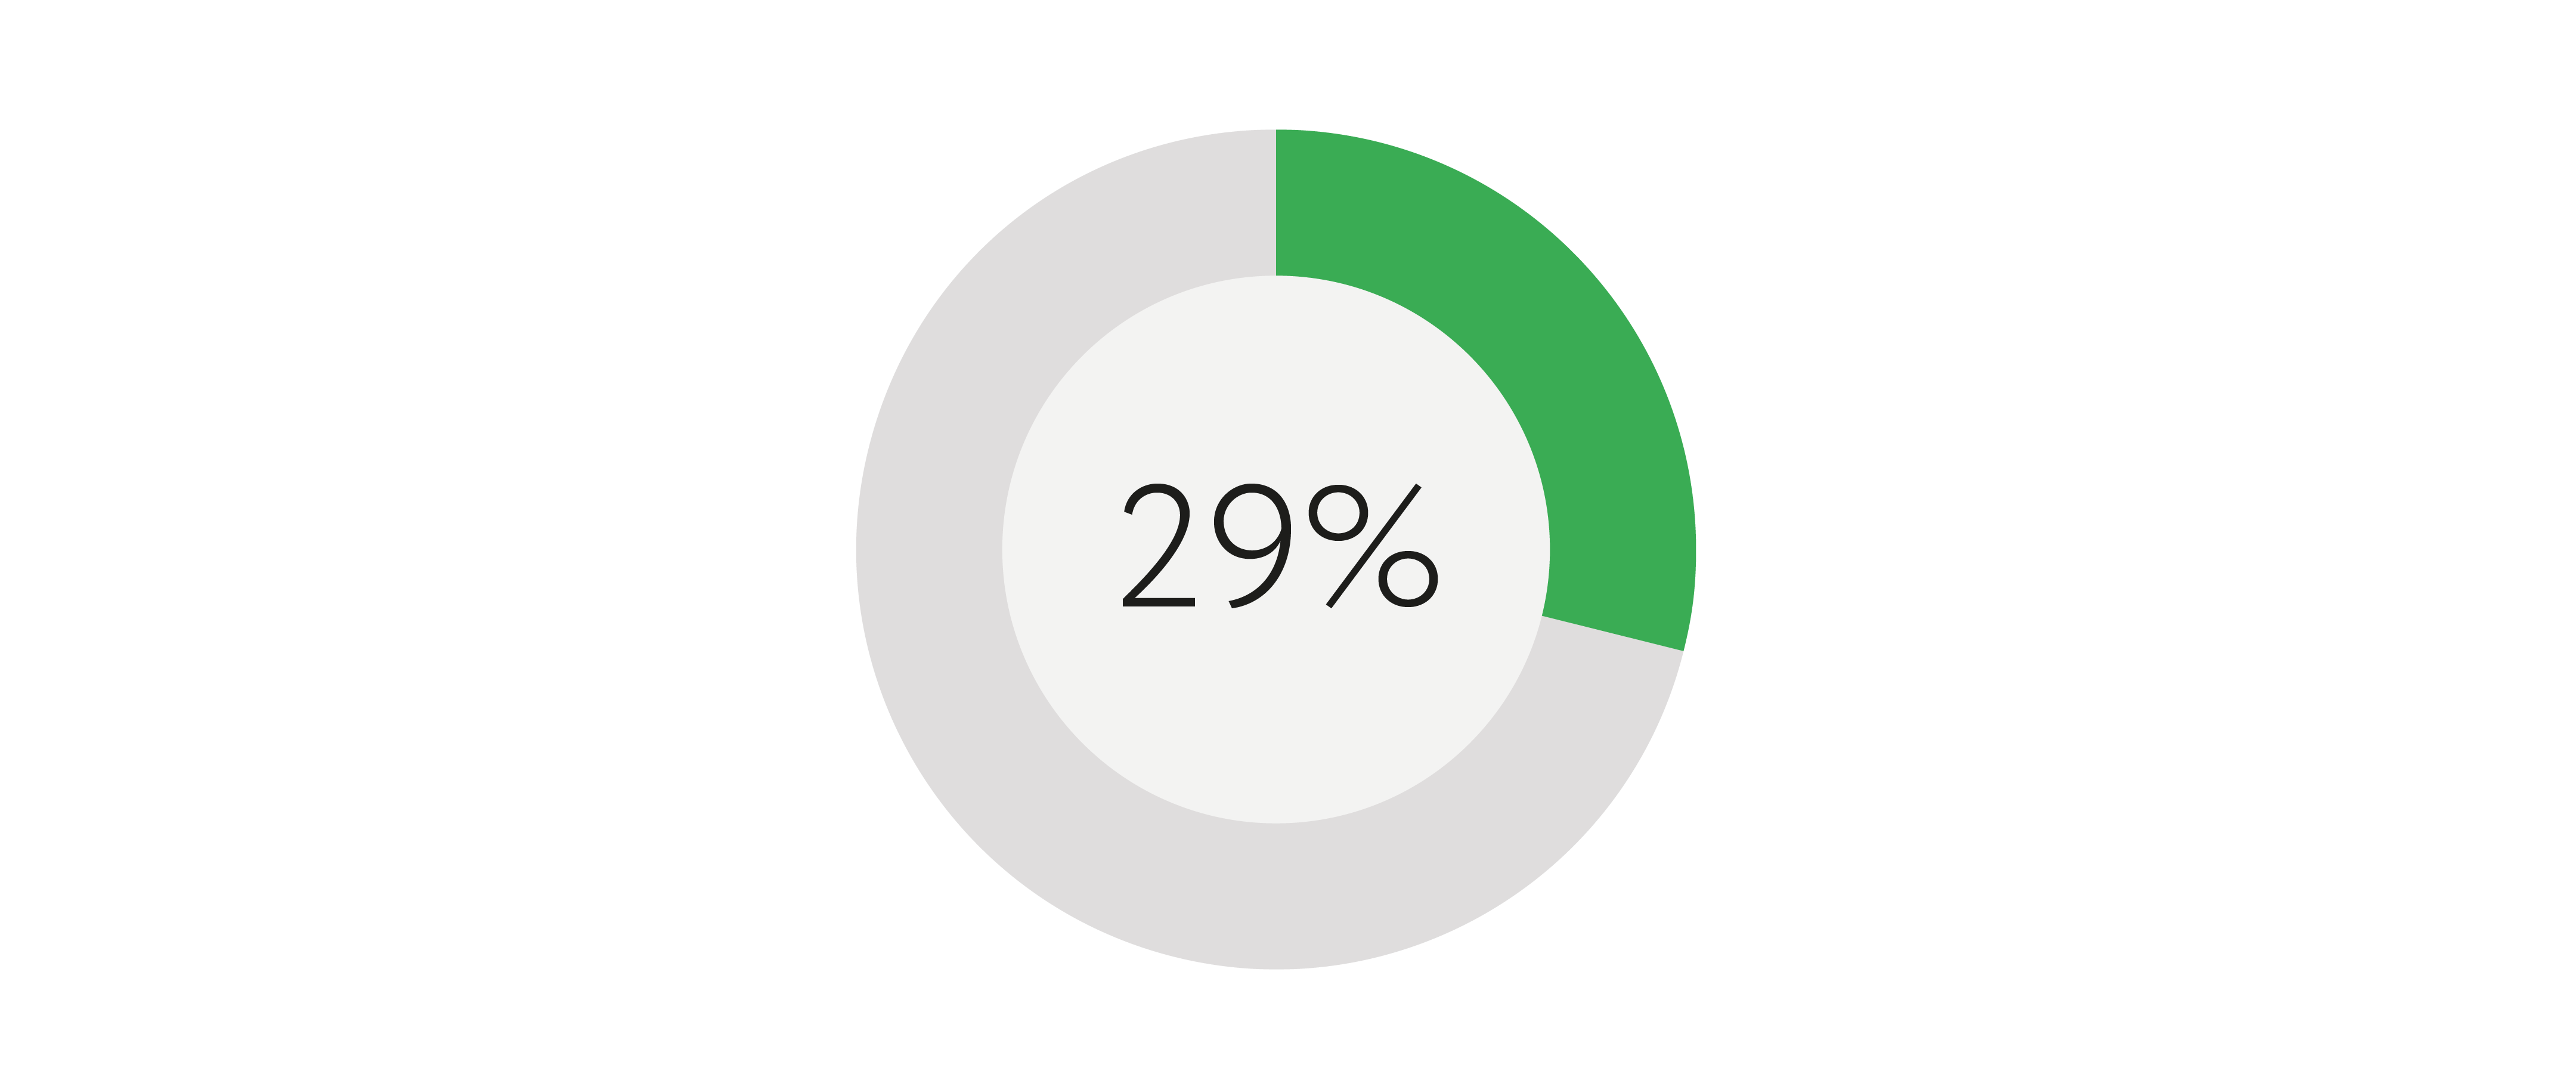 pie chart 29%